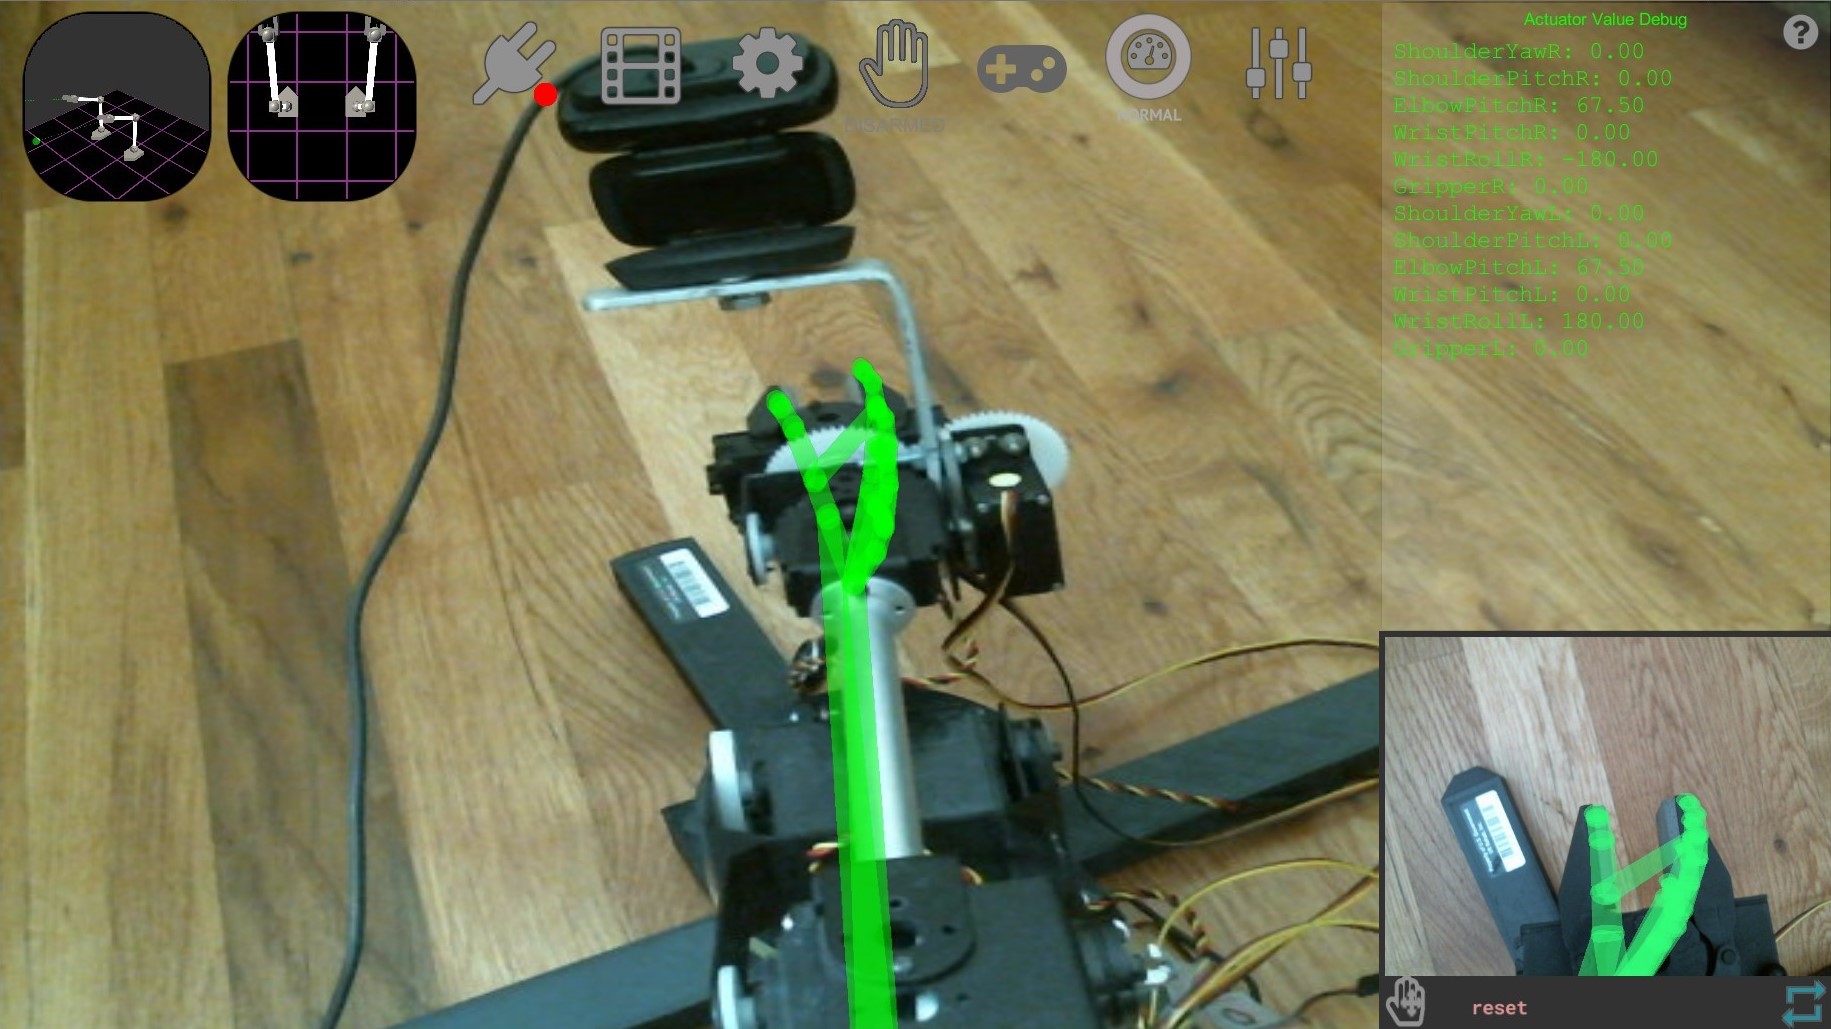 Kit Wear Your Robot de Doble Brazo - Haga Clic para Ampliar